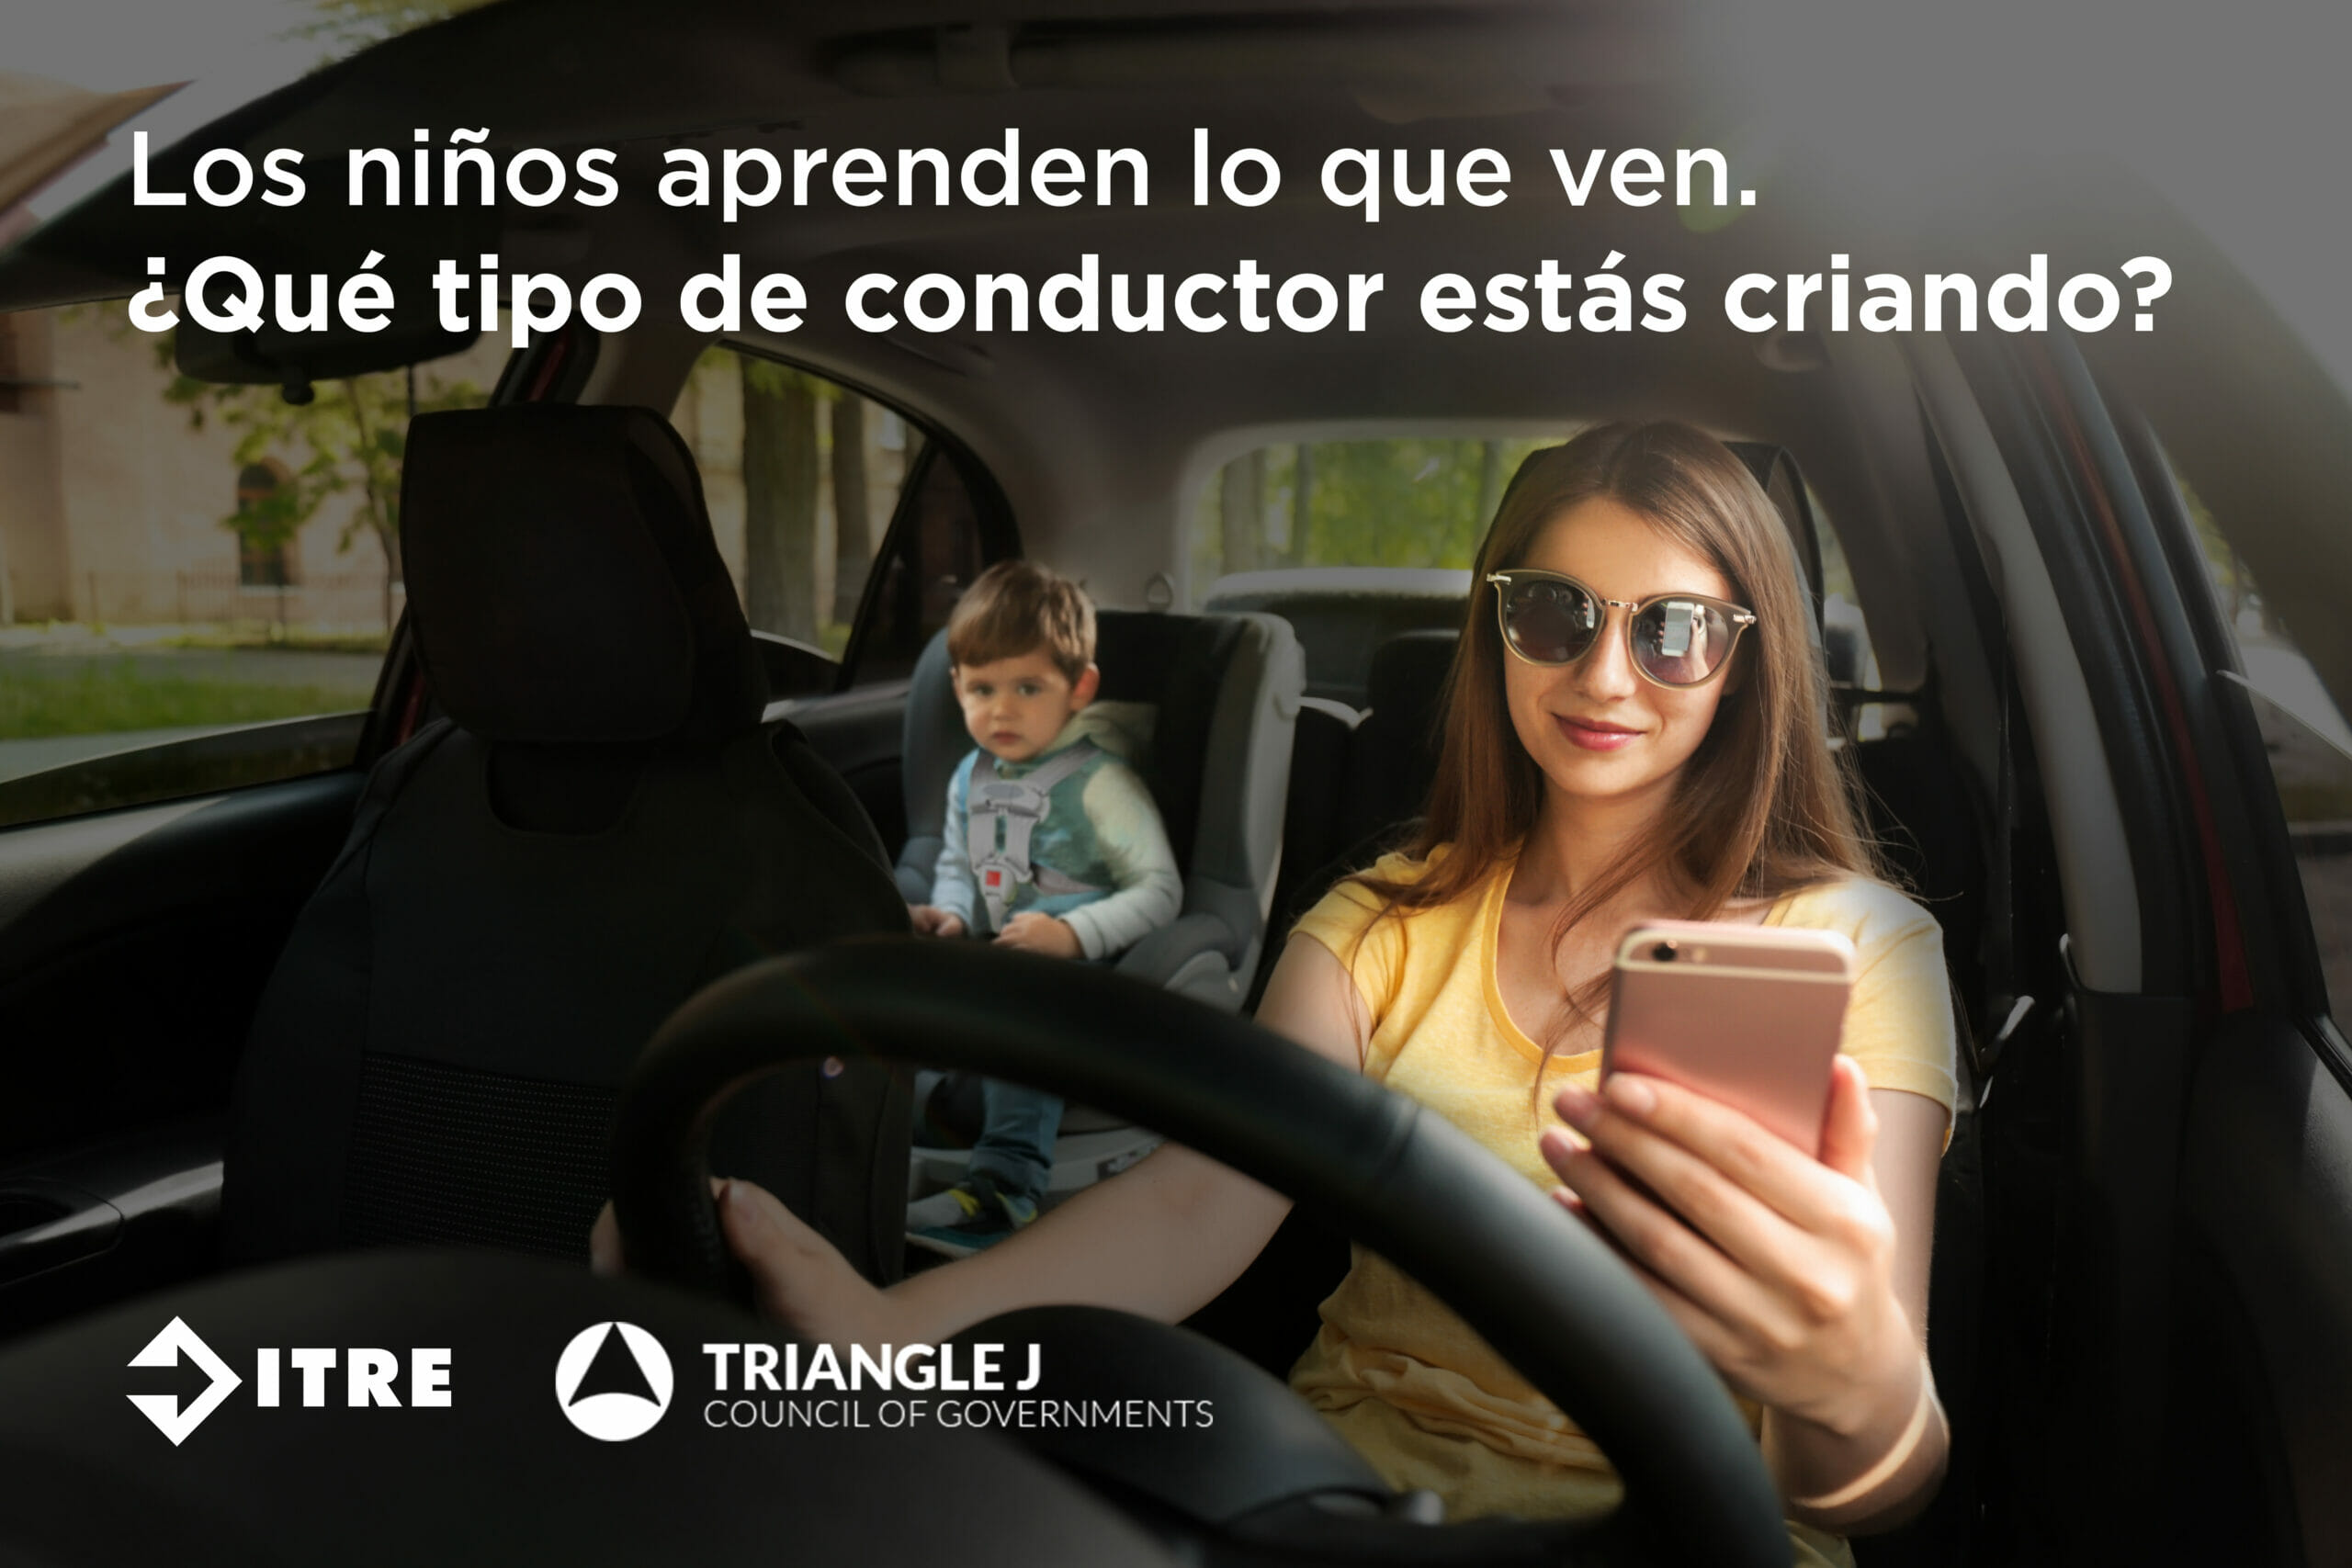 Image shows mother driving while using a phone. Child in backseat is watching. Caption reads: Los ninos aprenden lo quen ven. Que tipo de conductor estas criando?